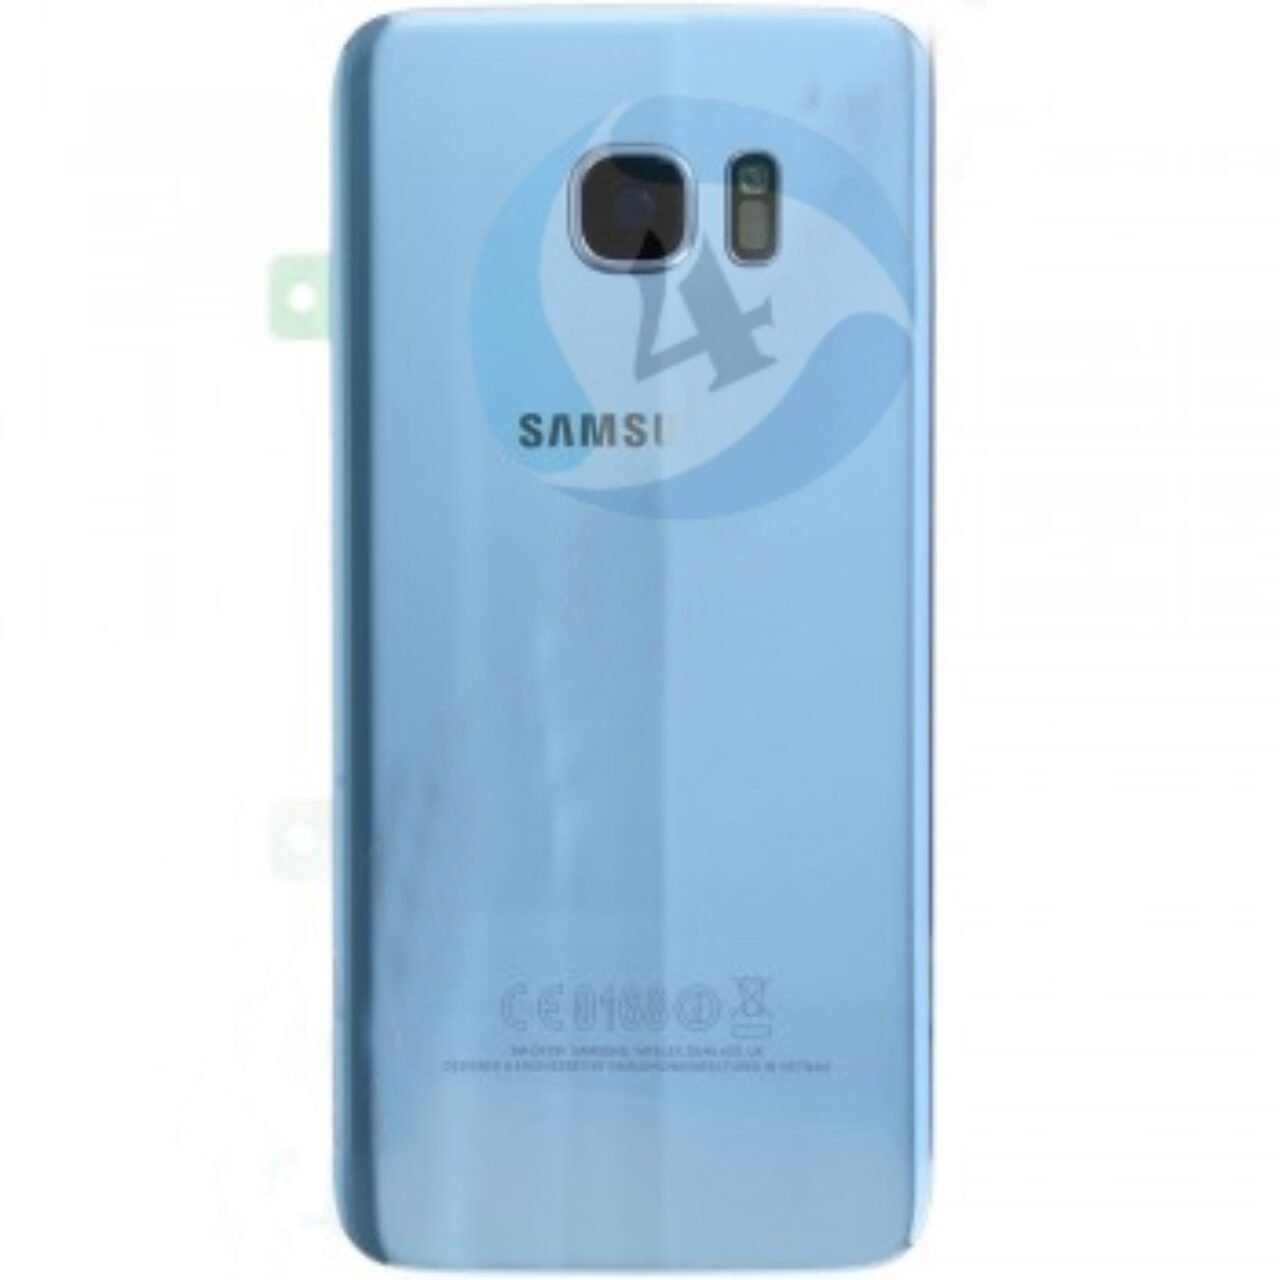 Samsung galaxy s7 edge sm g935f battery cover coral blue gh82 11346f